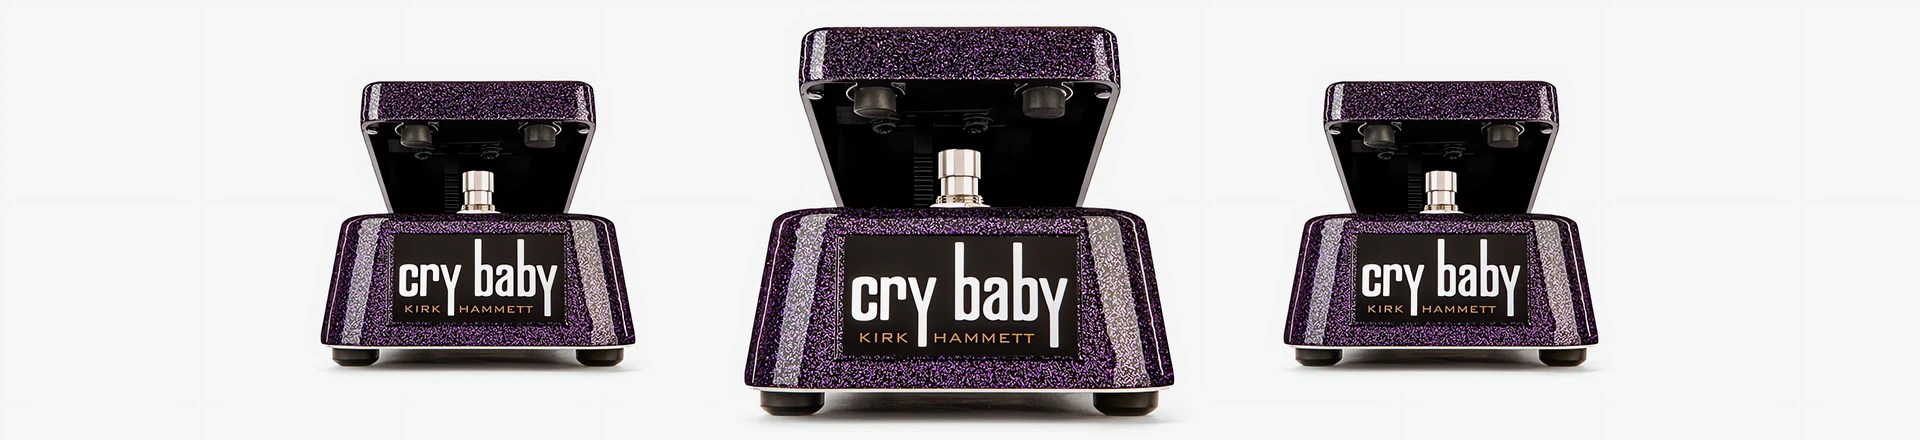 Cry Baby Wah Kirk Hammett KH95X - Nowa "kaczka" od Hammetta oraz Dunlopa